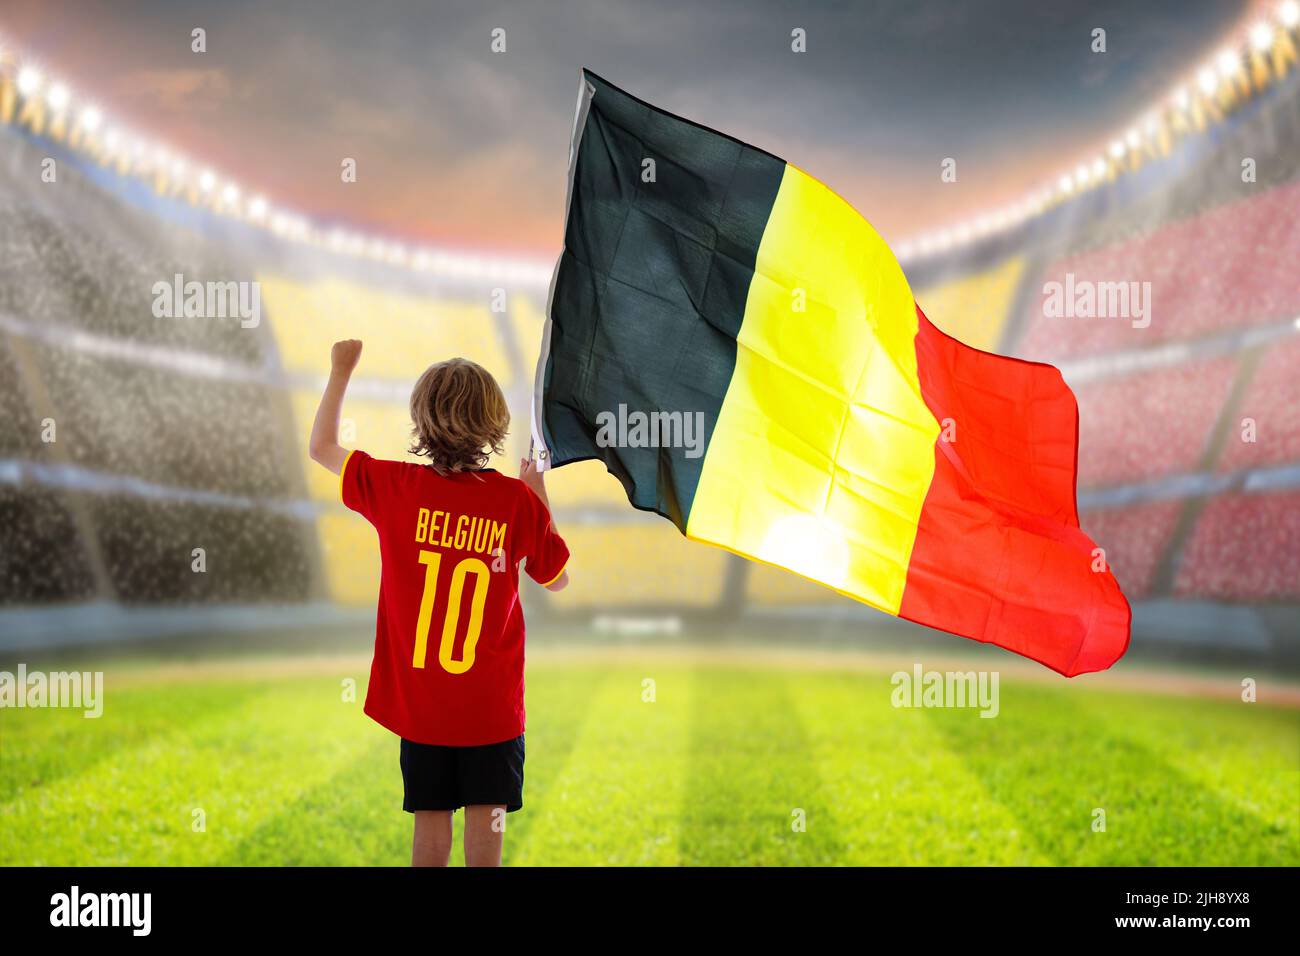 Belgium football fan. Belgian kids play soccer on outdoor field. Cheering team fans celebrate victory. Go Red Devils! Stock Photo